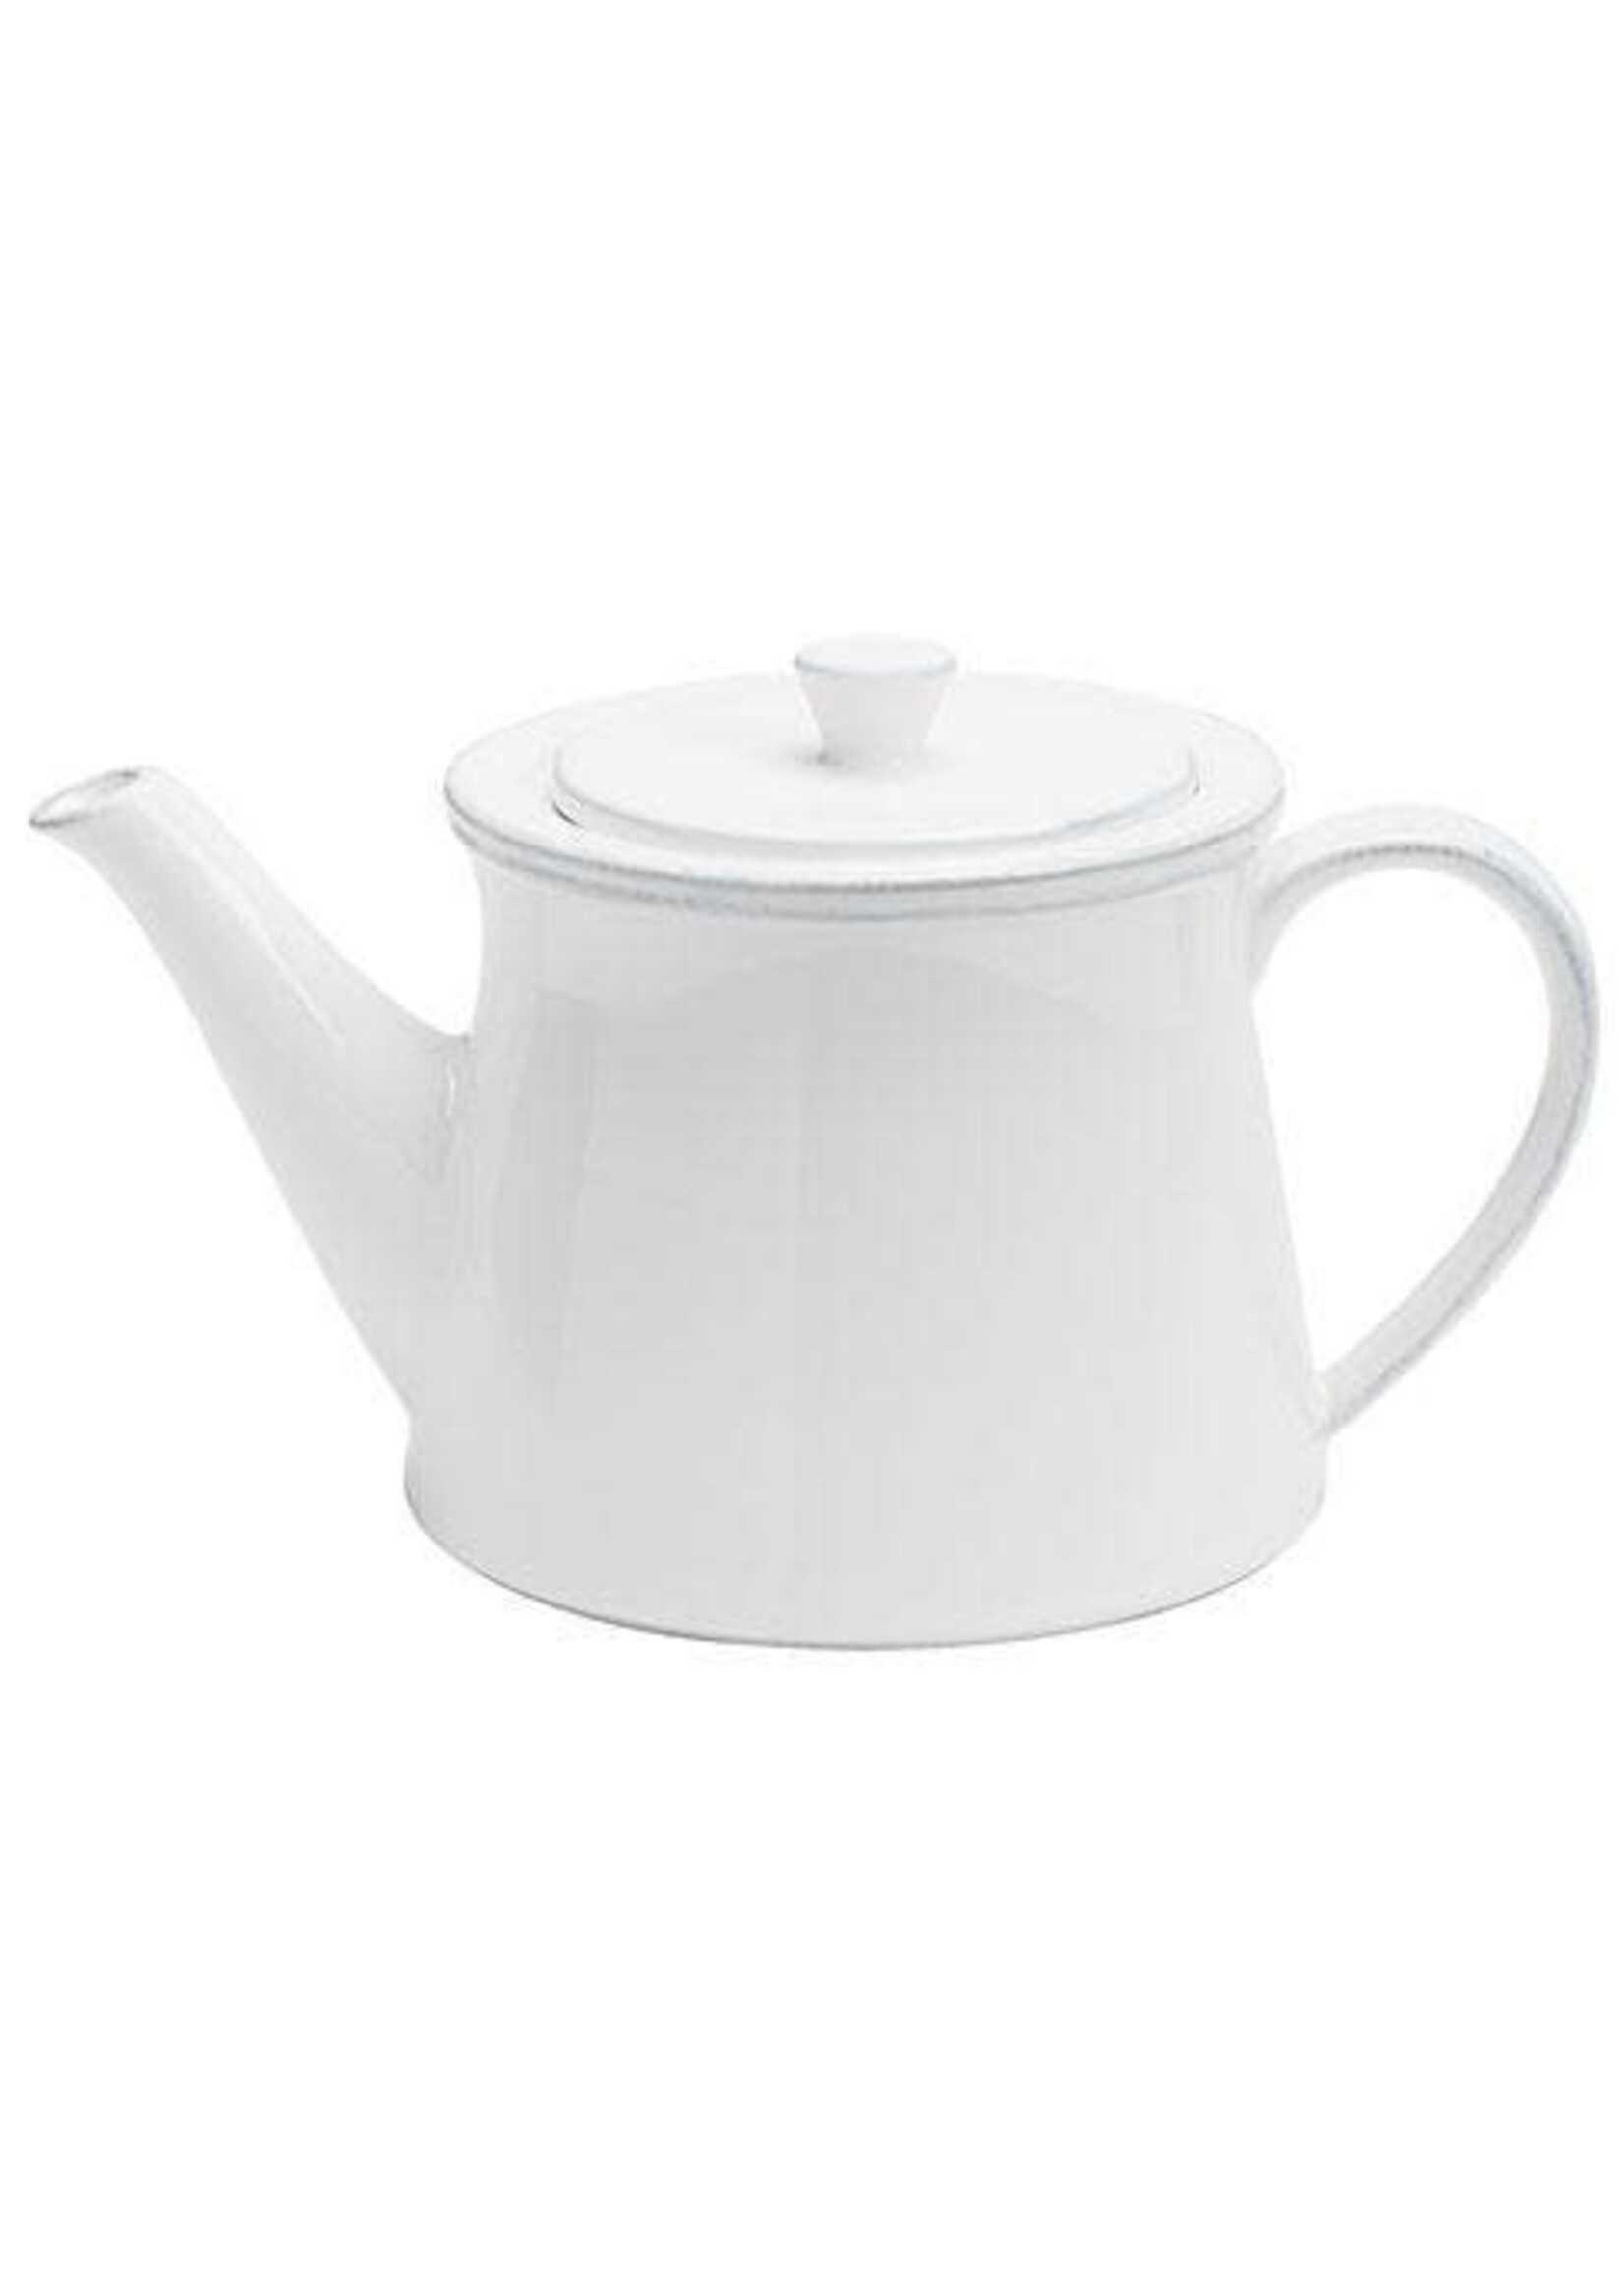 CASAFINA LIVING Friso Tea Pot 51 oz., White